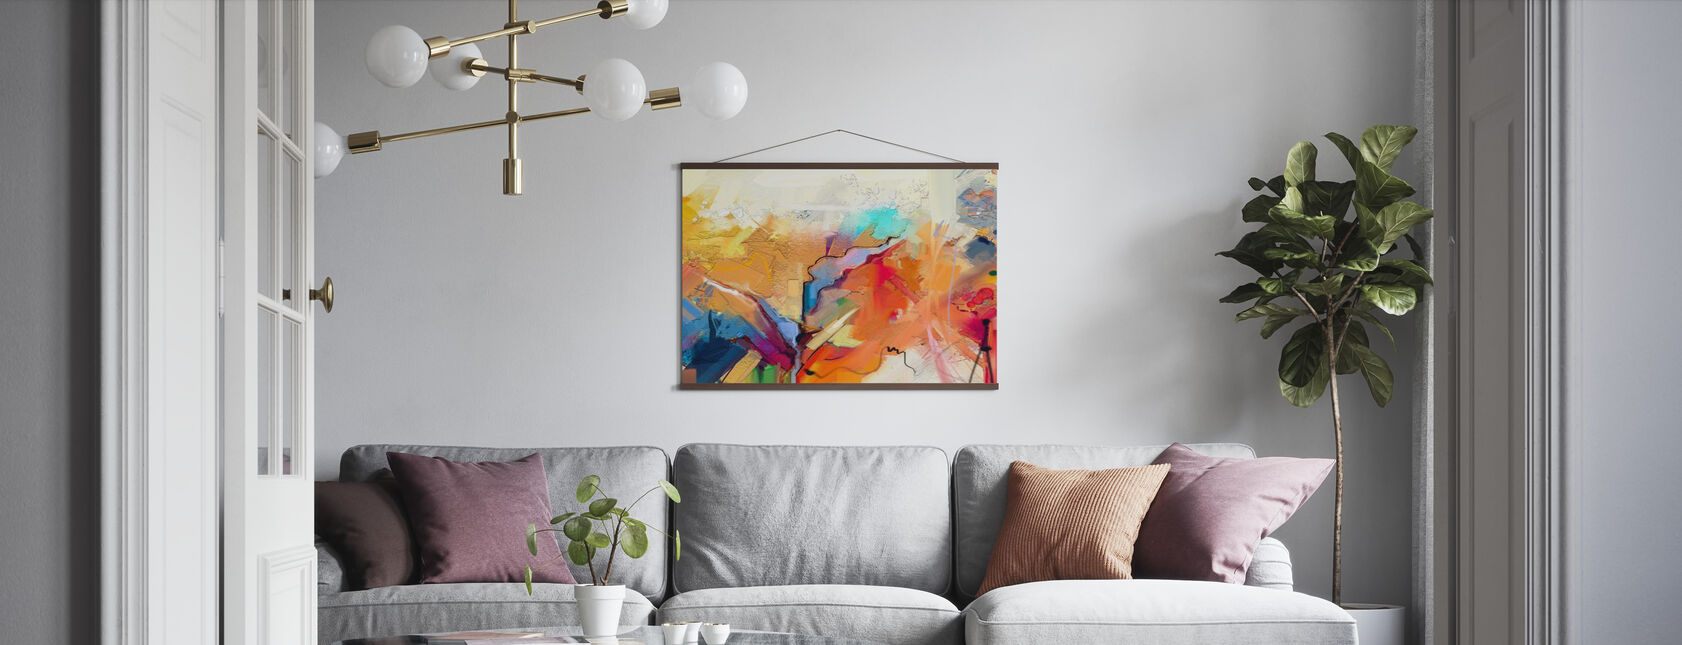 Farverige abstrakt maleri - Plakat - Stue